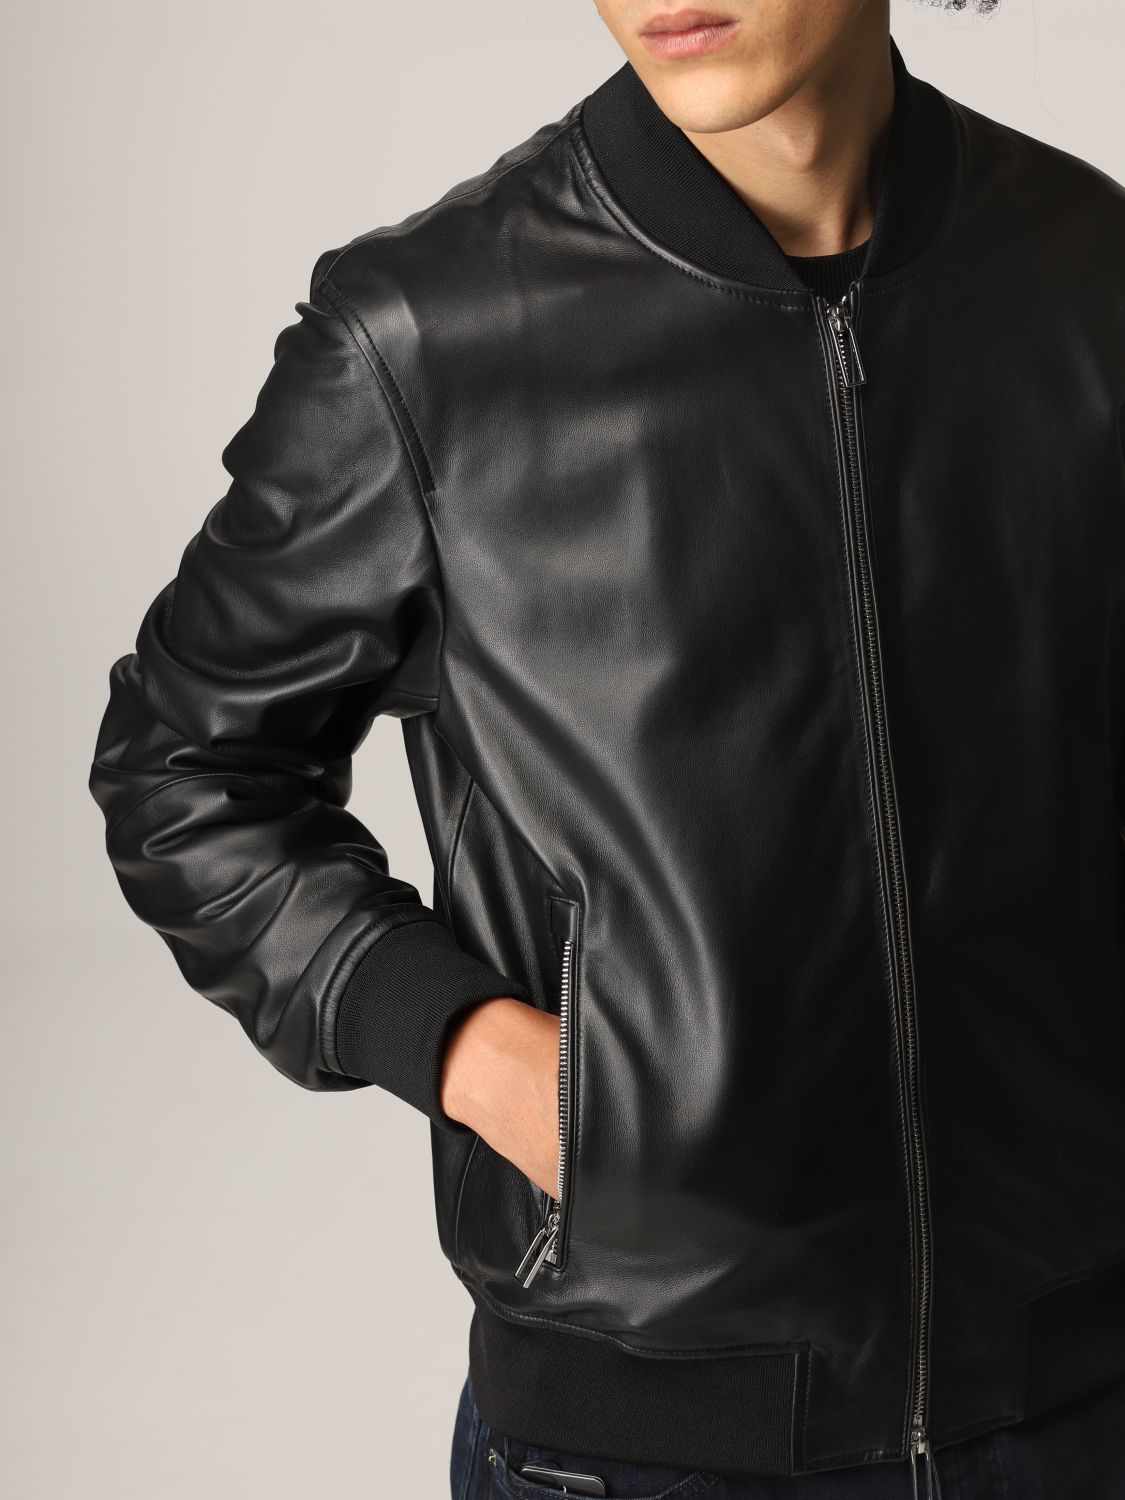 dief Ontvanger twee weken Jacket Emporio Armani Flash Sales, SAVE 56% - horiconphoenix.com